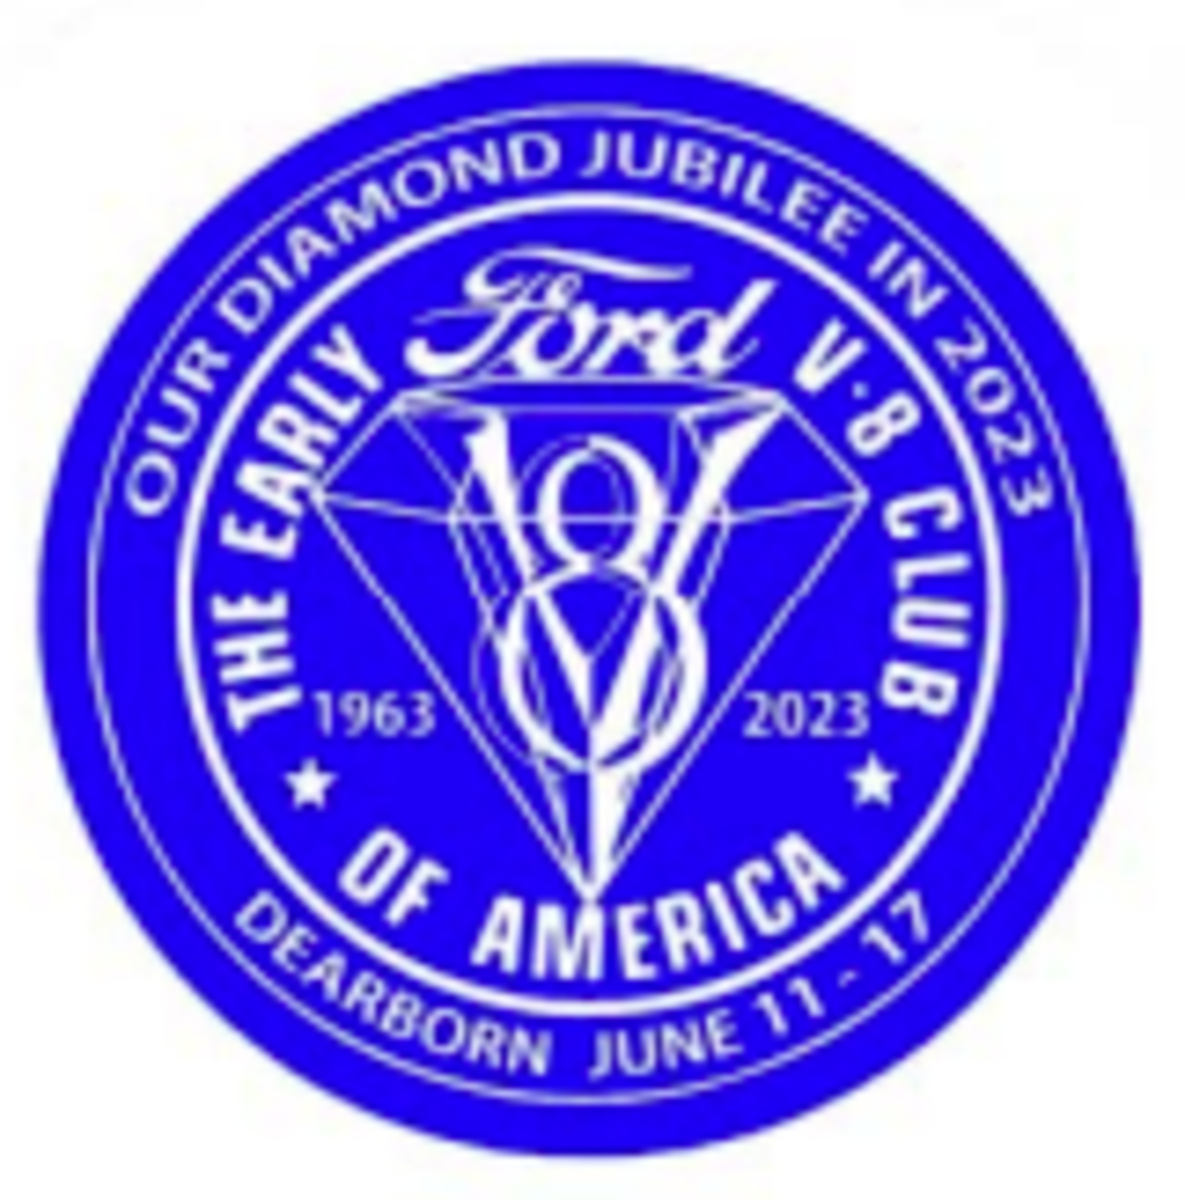 Early Ford V-8 Club of America 60th Anniversary Diamond Jubilee Celebration June 11th -17th 2023